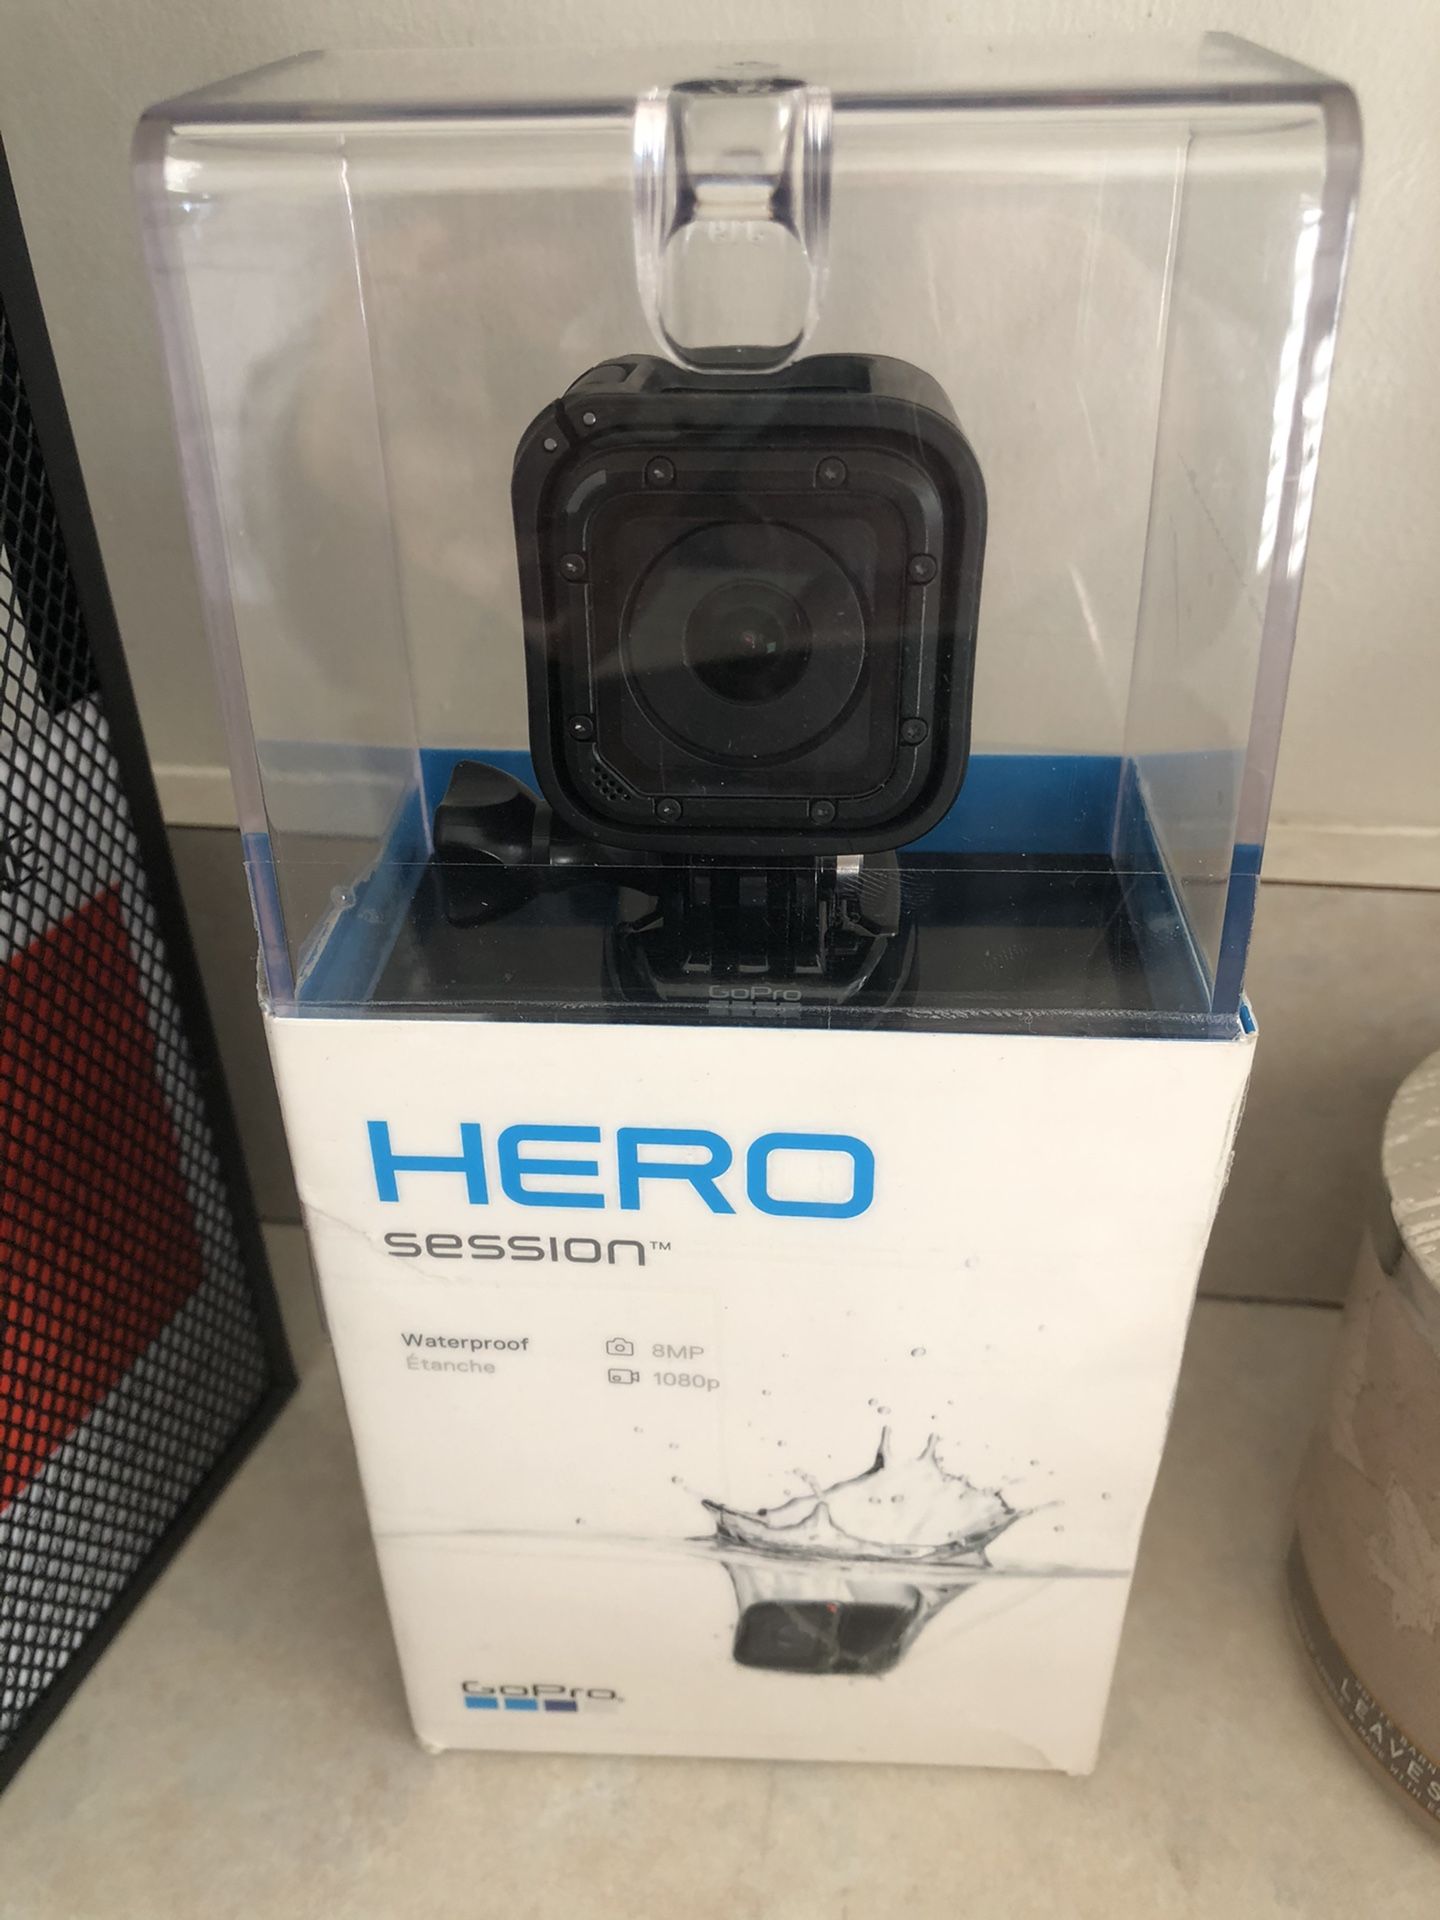 GoPro Hero Session waterproof camera